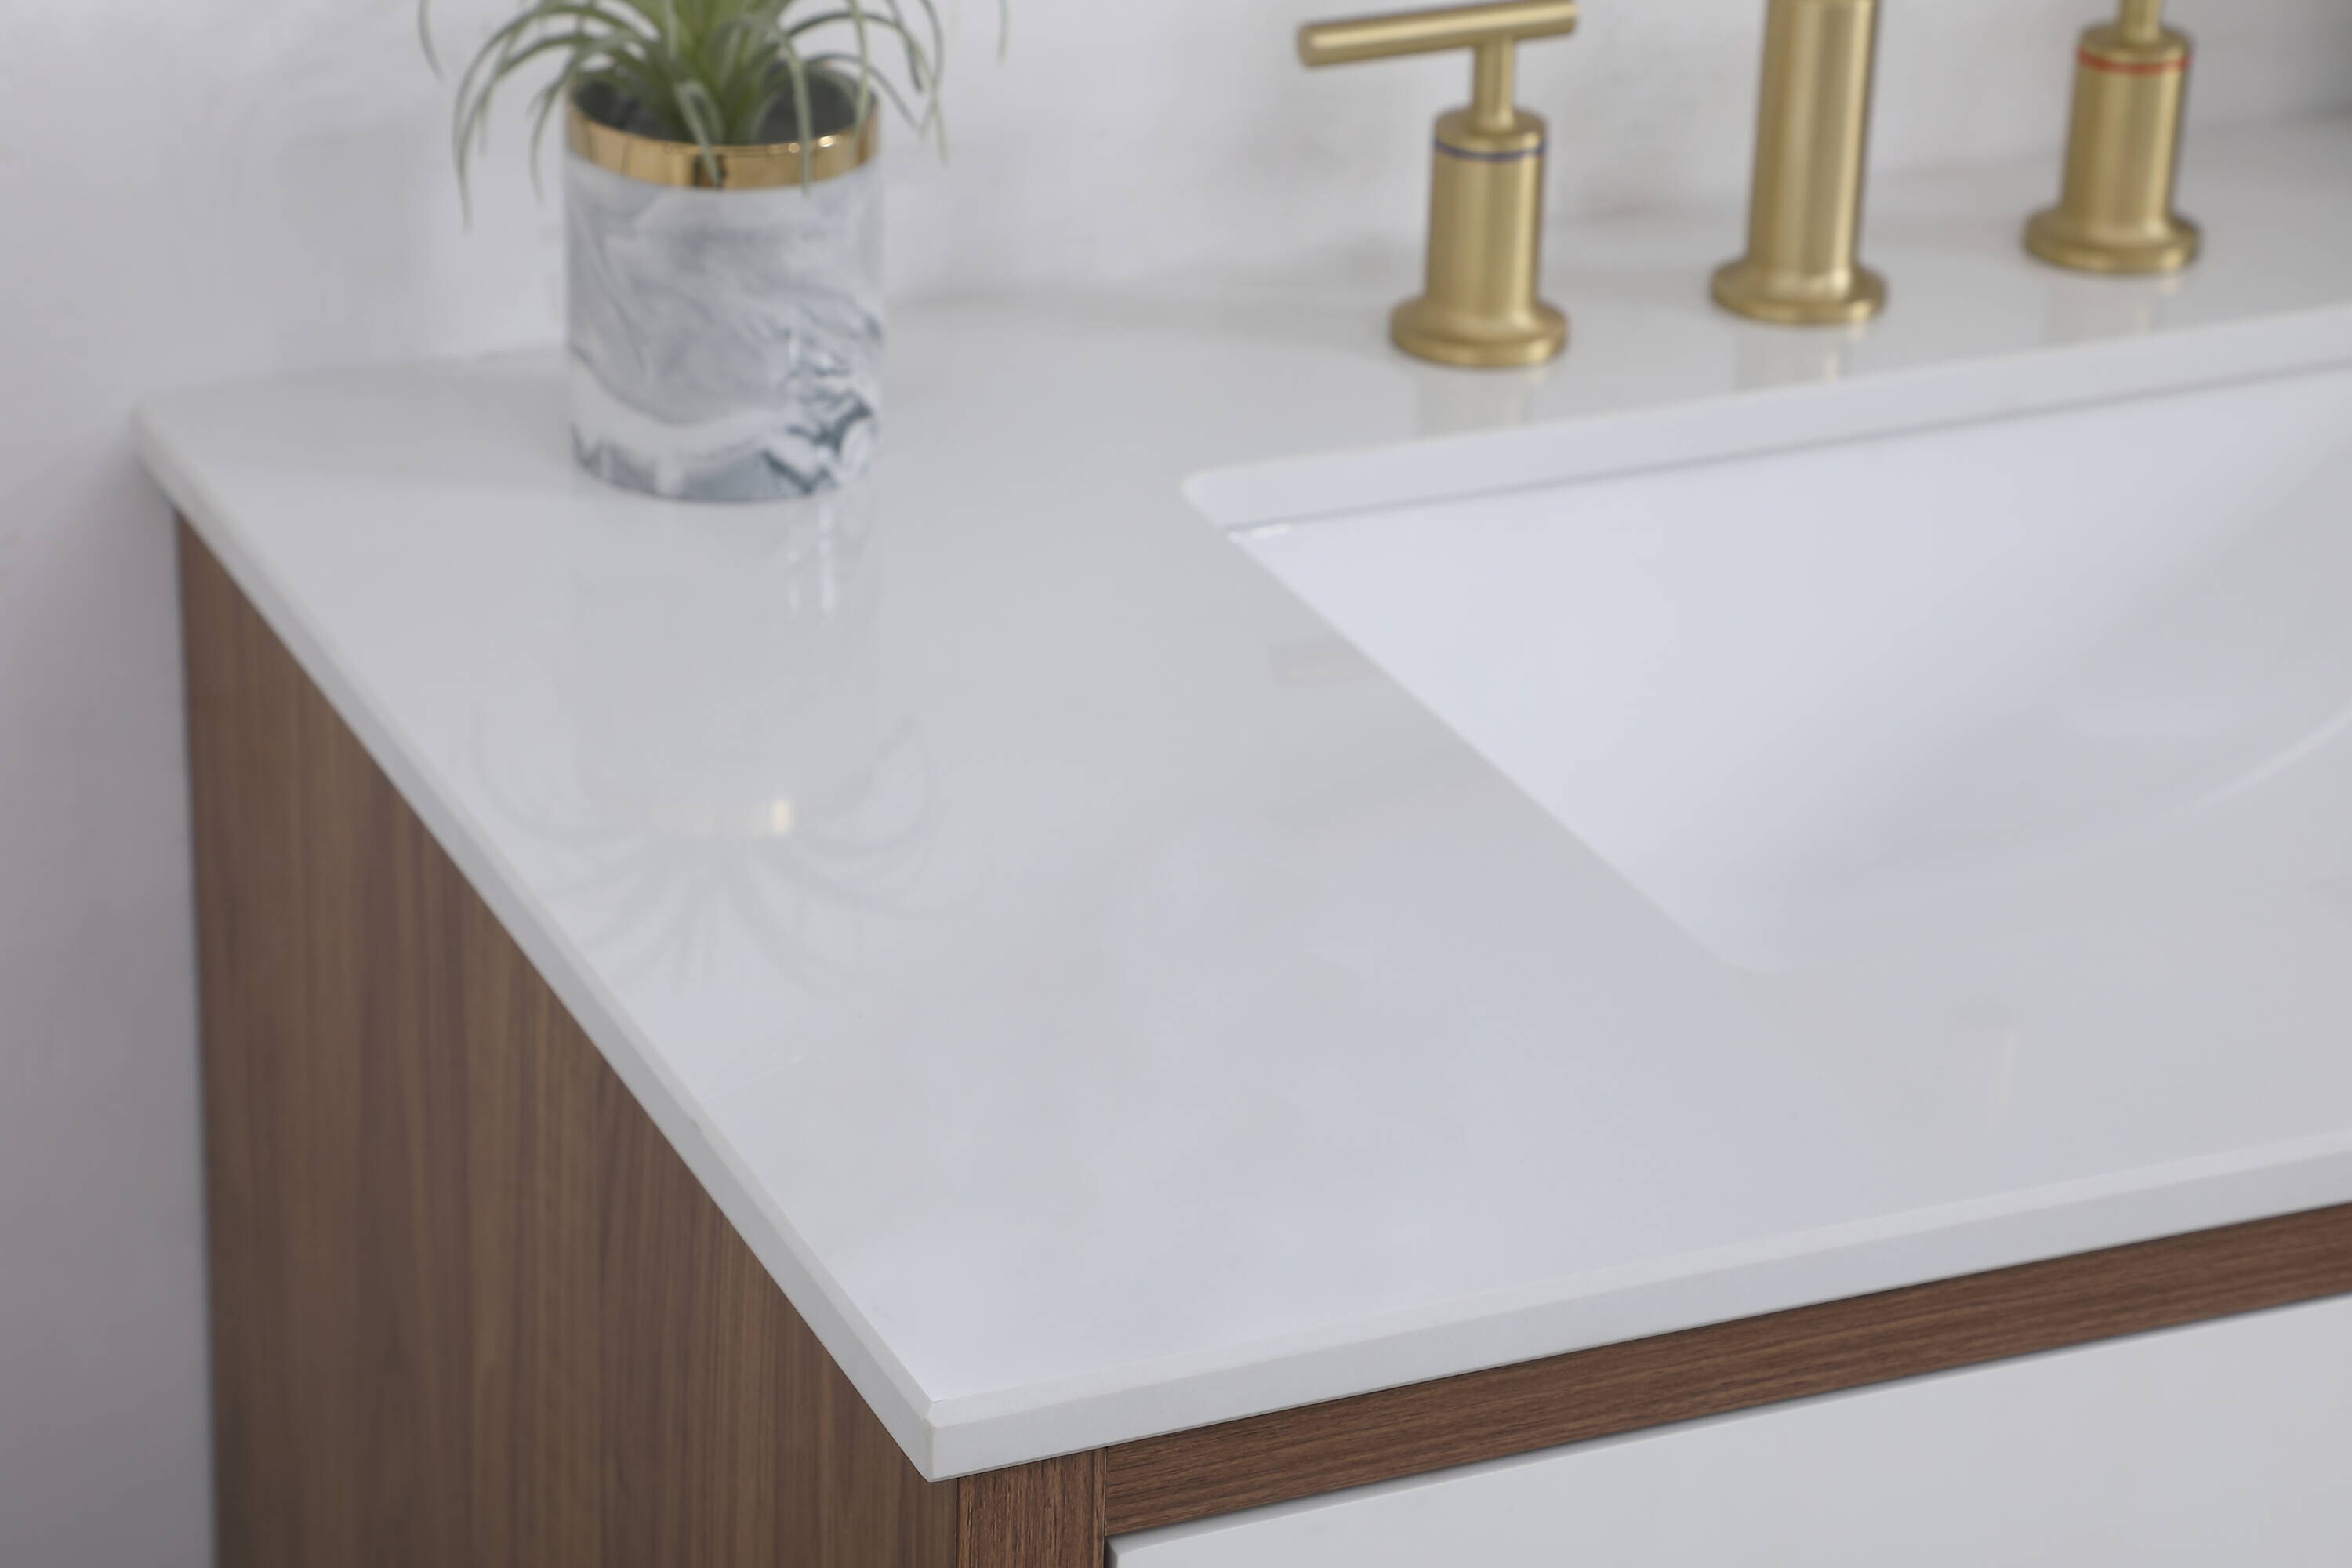 Elegant Decor First Impressions 36-in White Undermount Single Sink ...